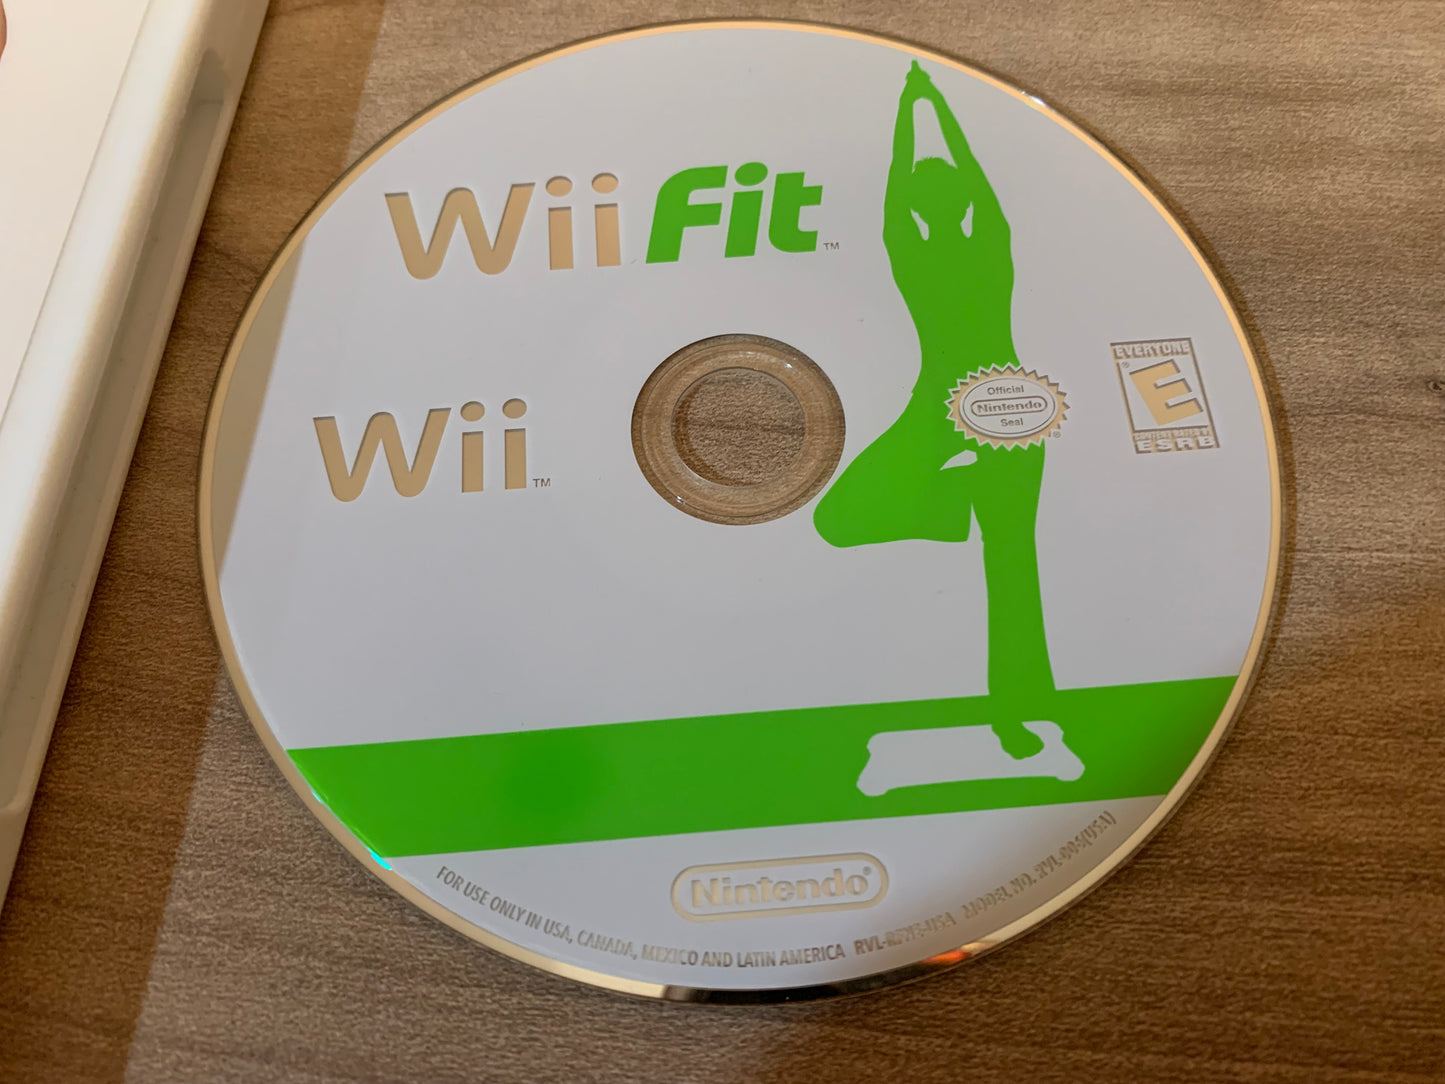 NiNTENDO Wii | Wii FiT